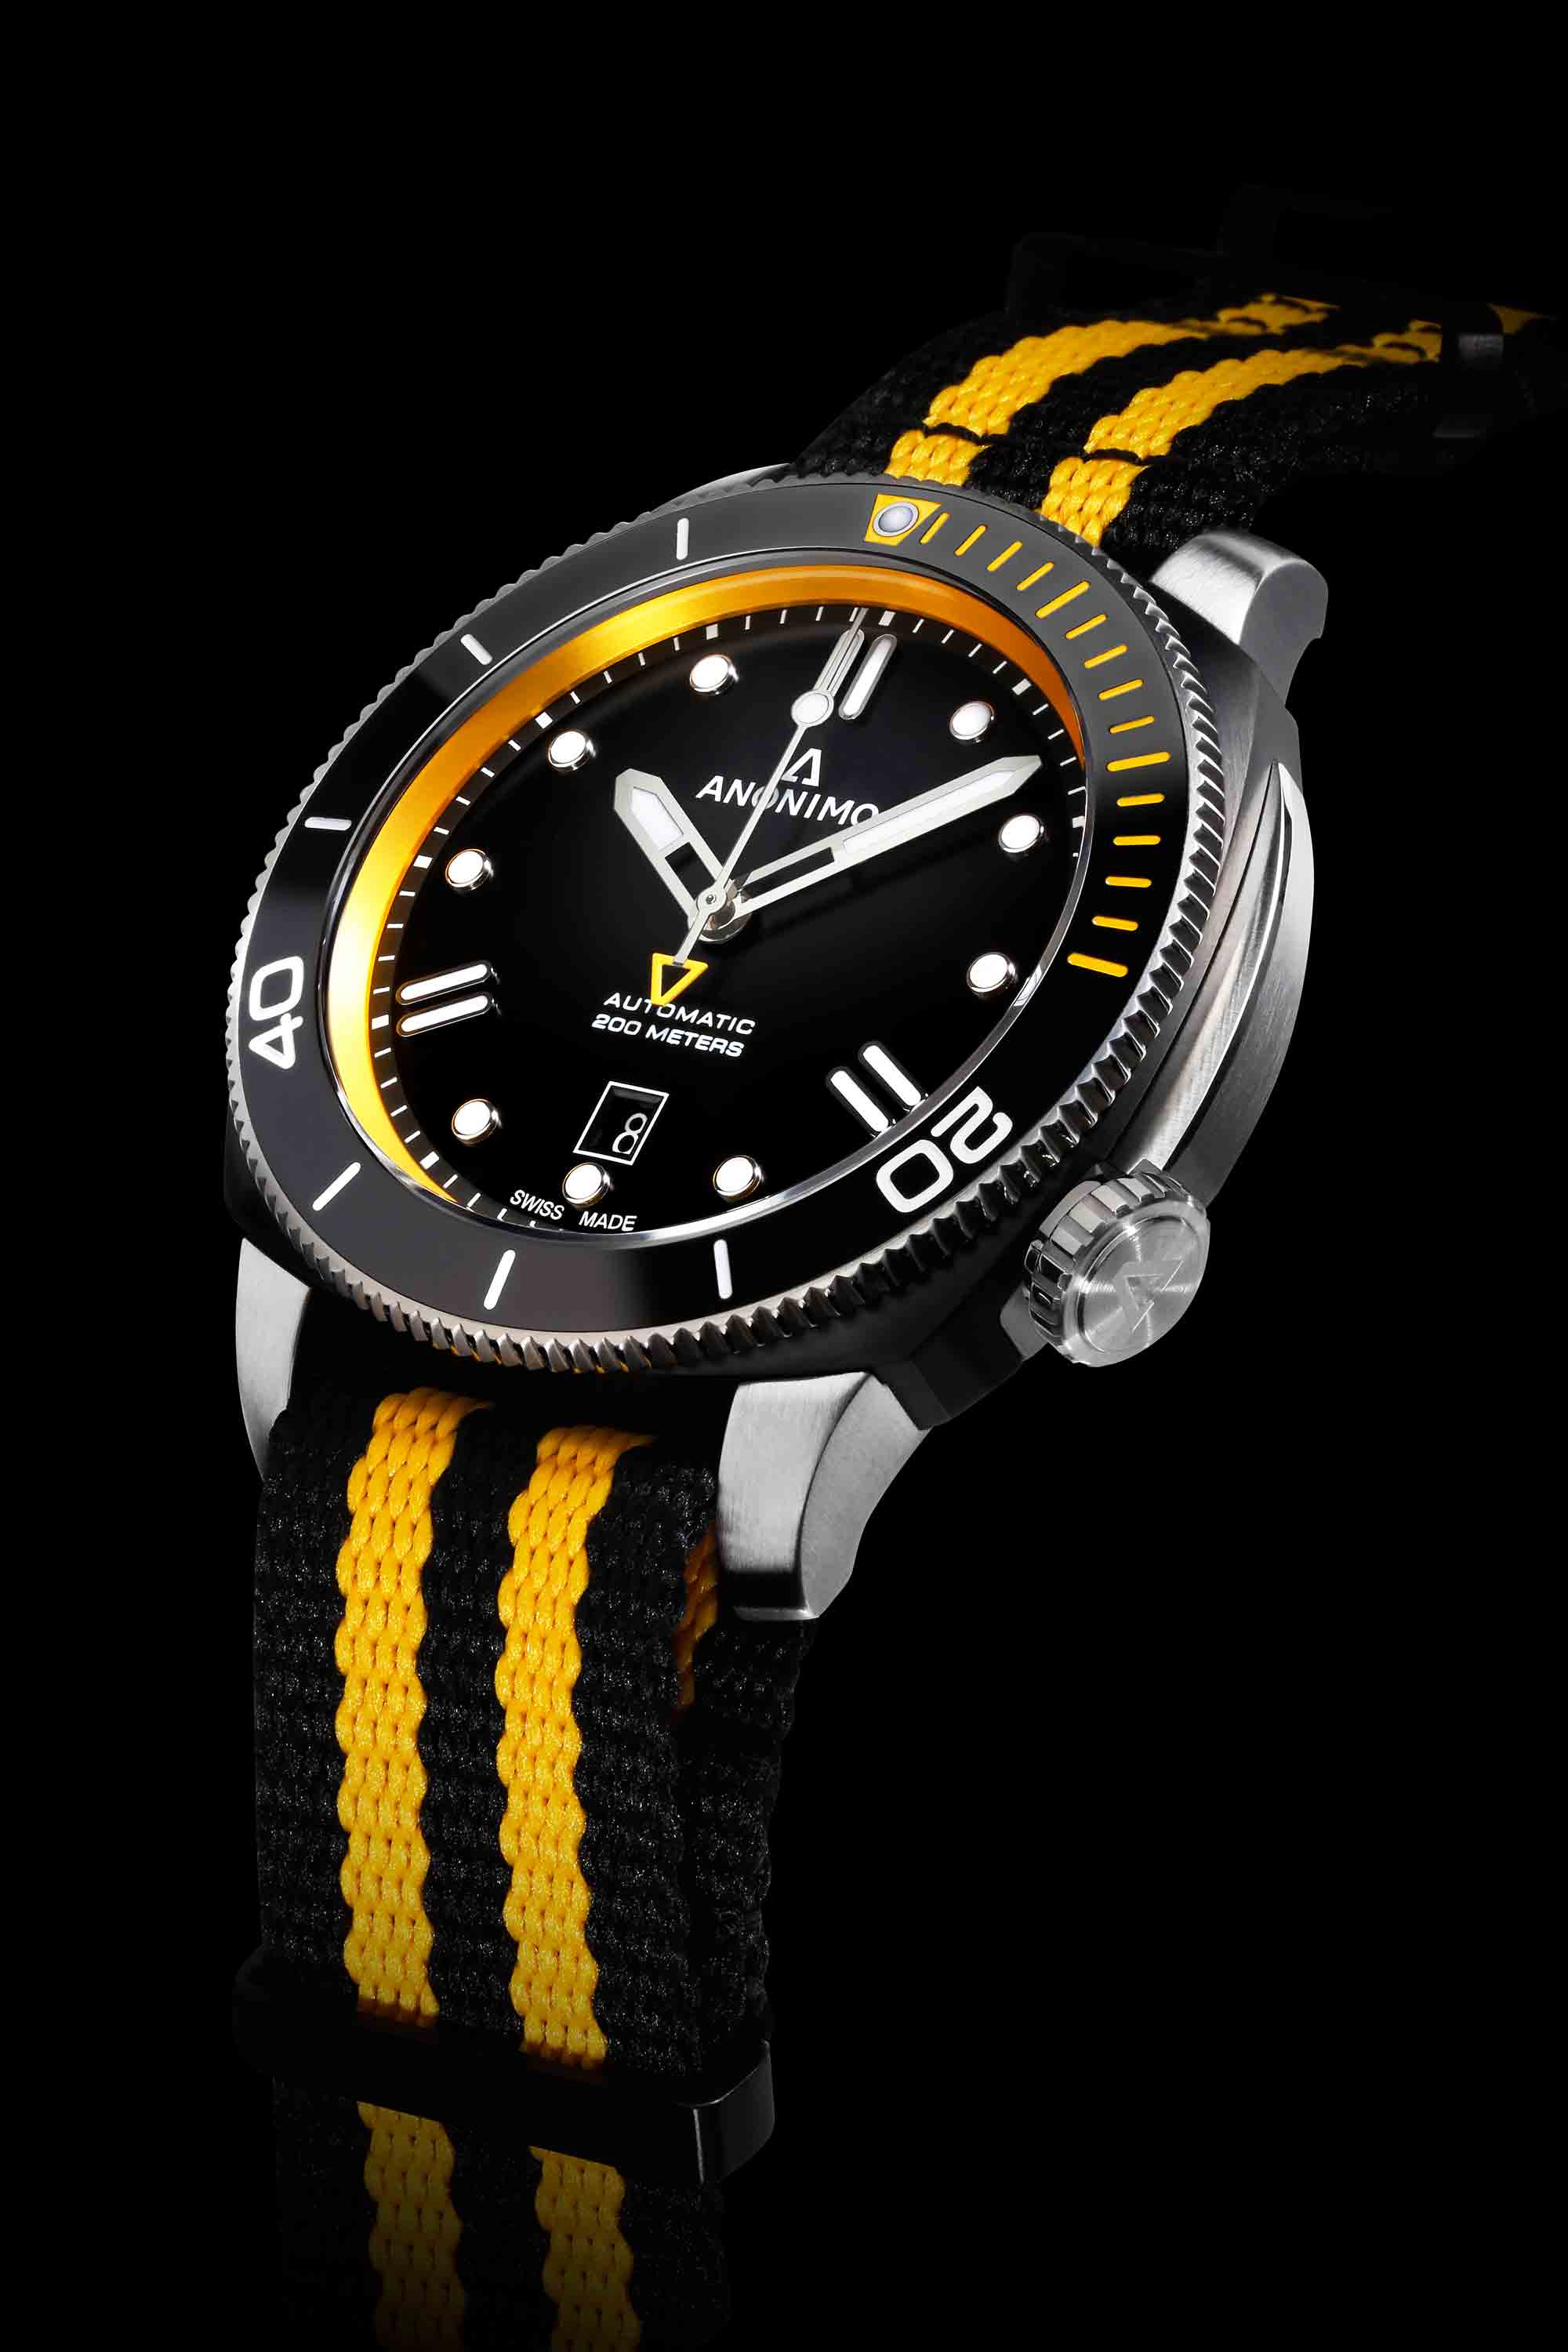 Anonimo watch presented by King Felipe VI of Spain